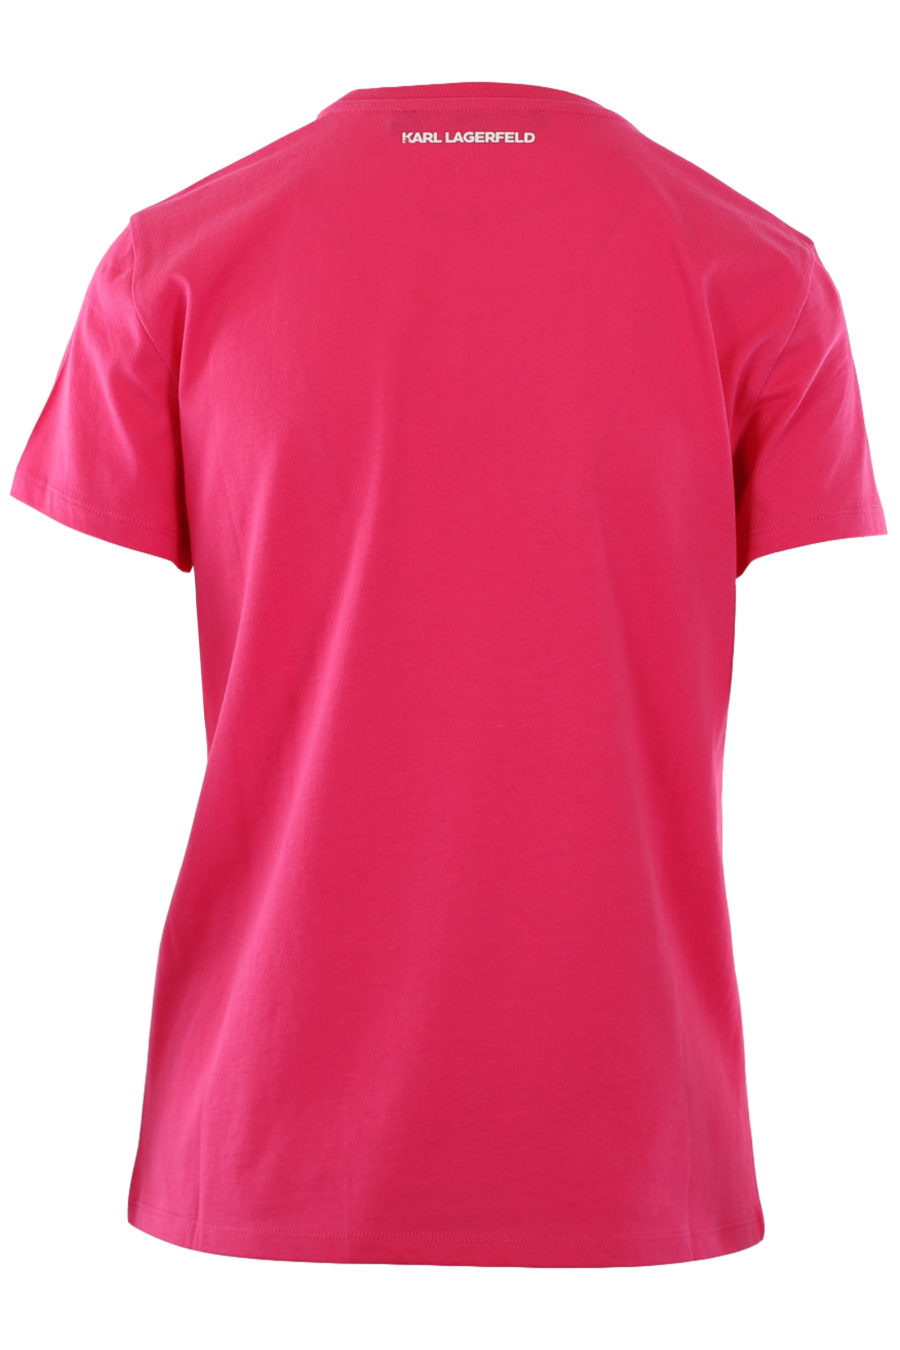 Camiseta fucsia con logo multicolor de goma - IMG 0817